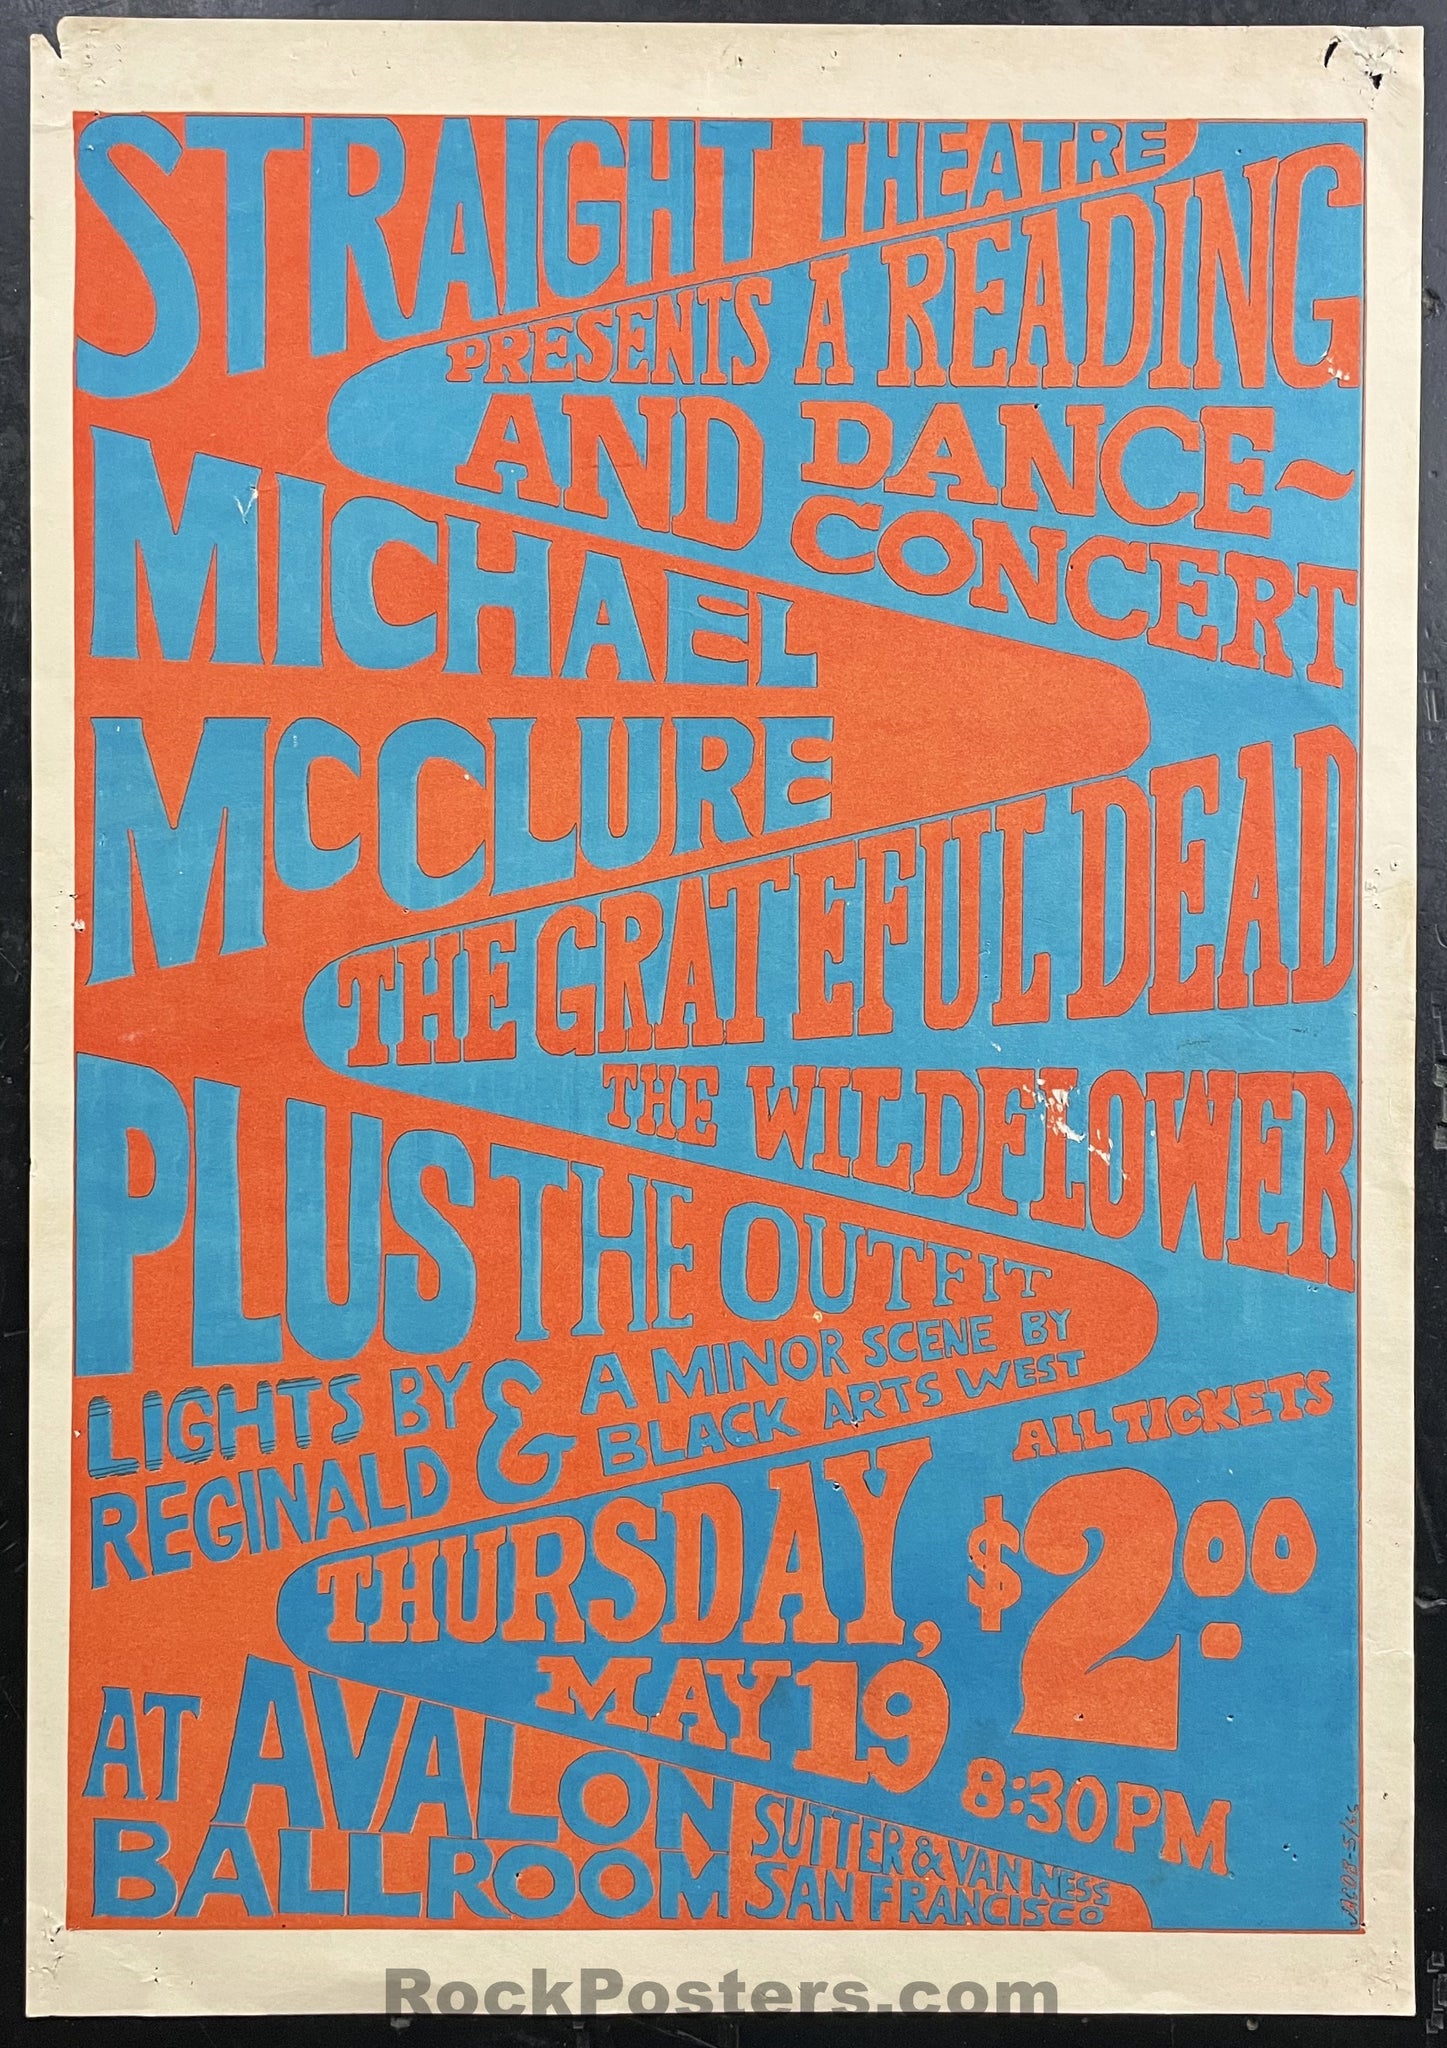 AUCTION - AOR 2.16 - Grateful Dead - 1966 Poster - Avalon Ballroom - Very Good